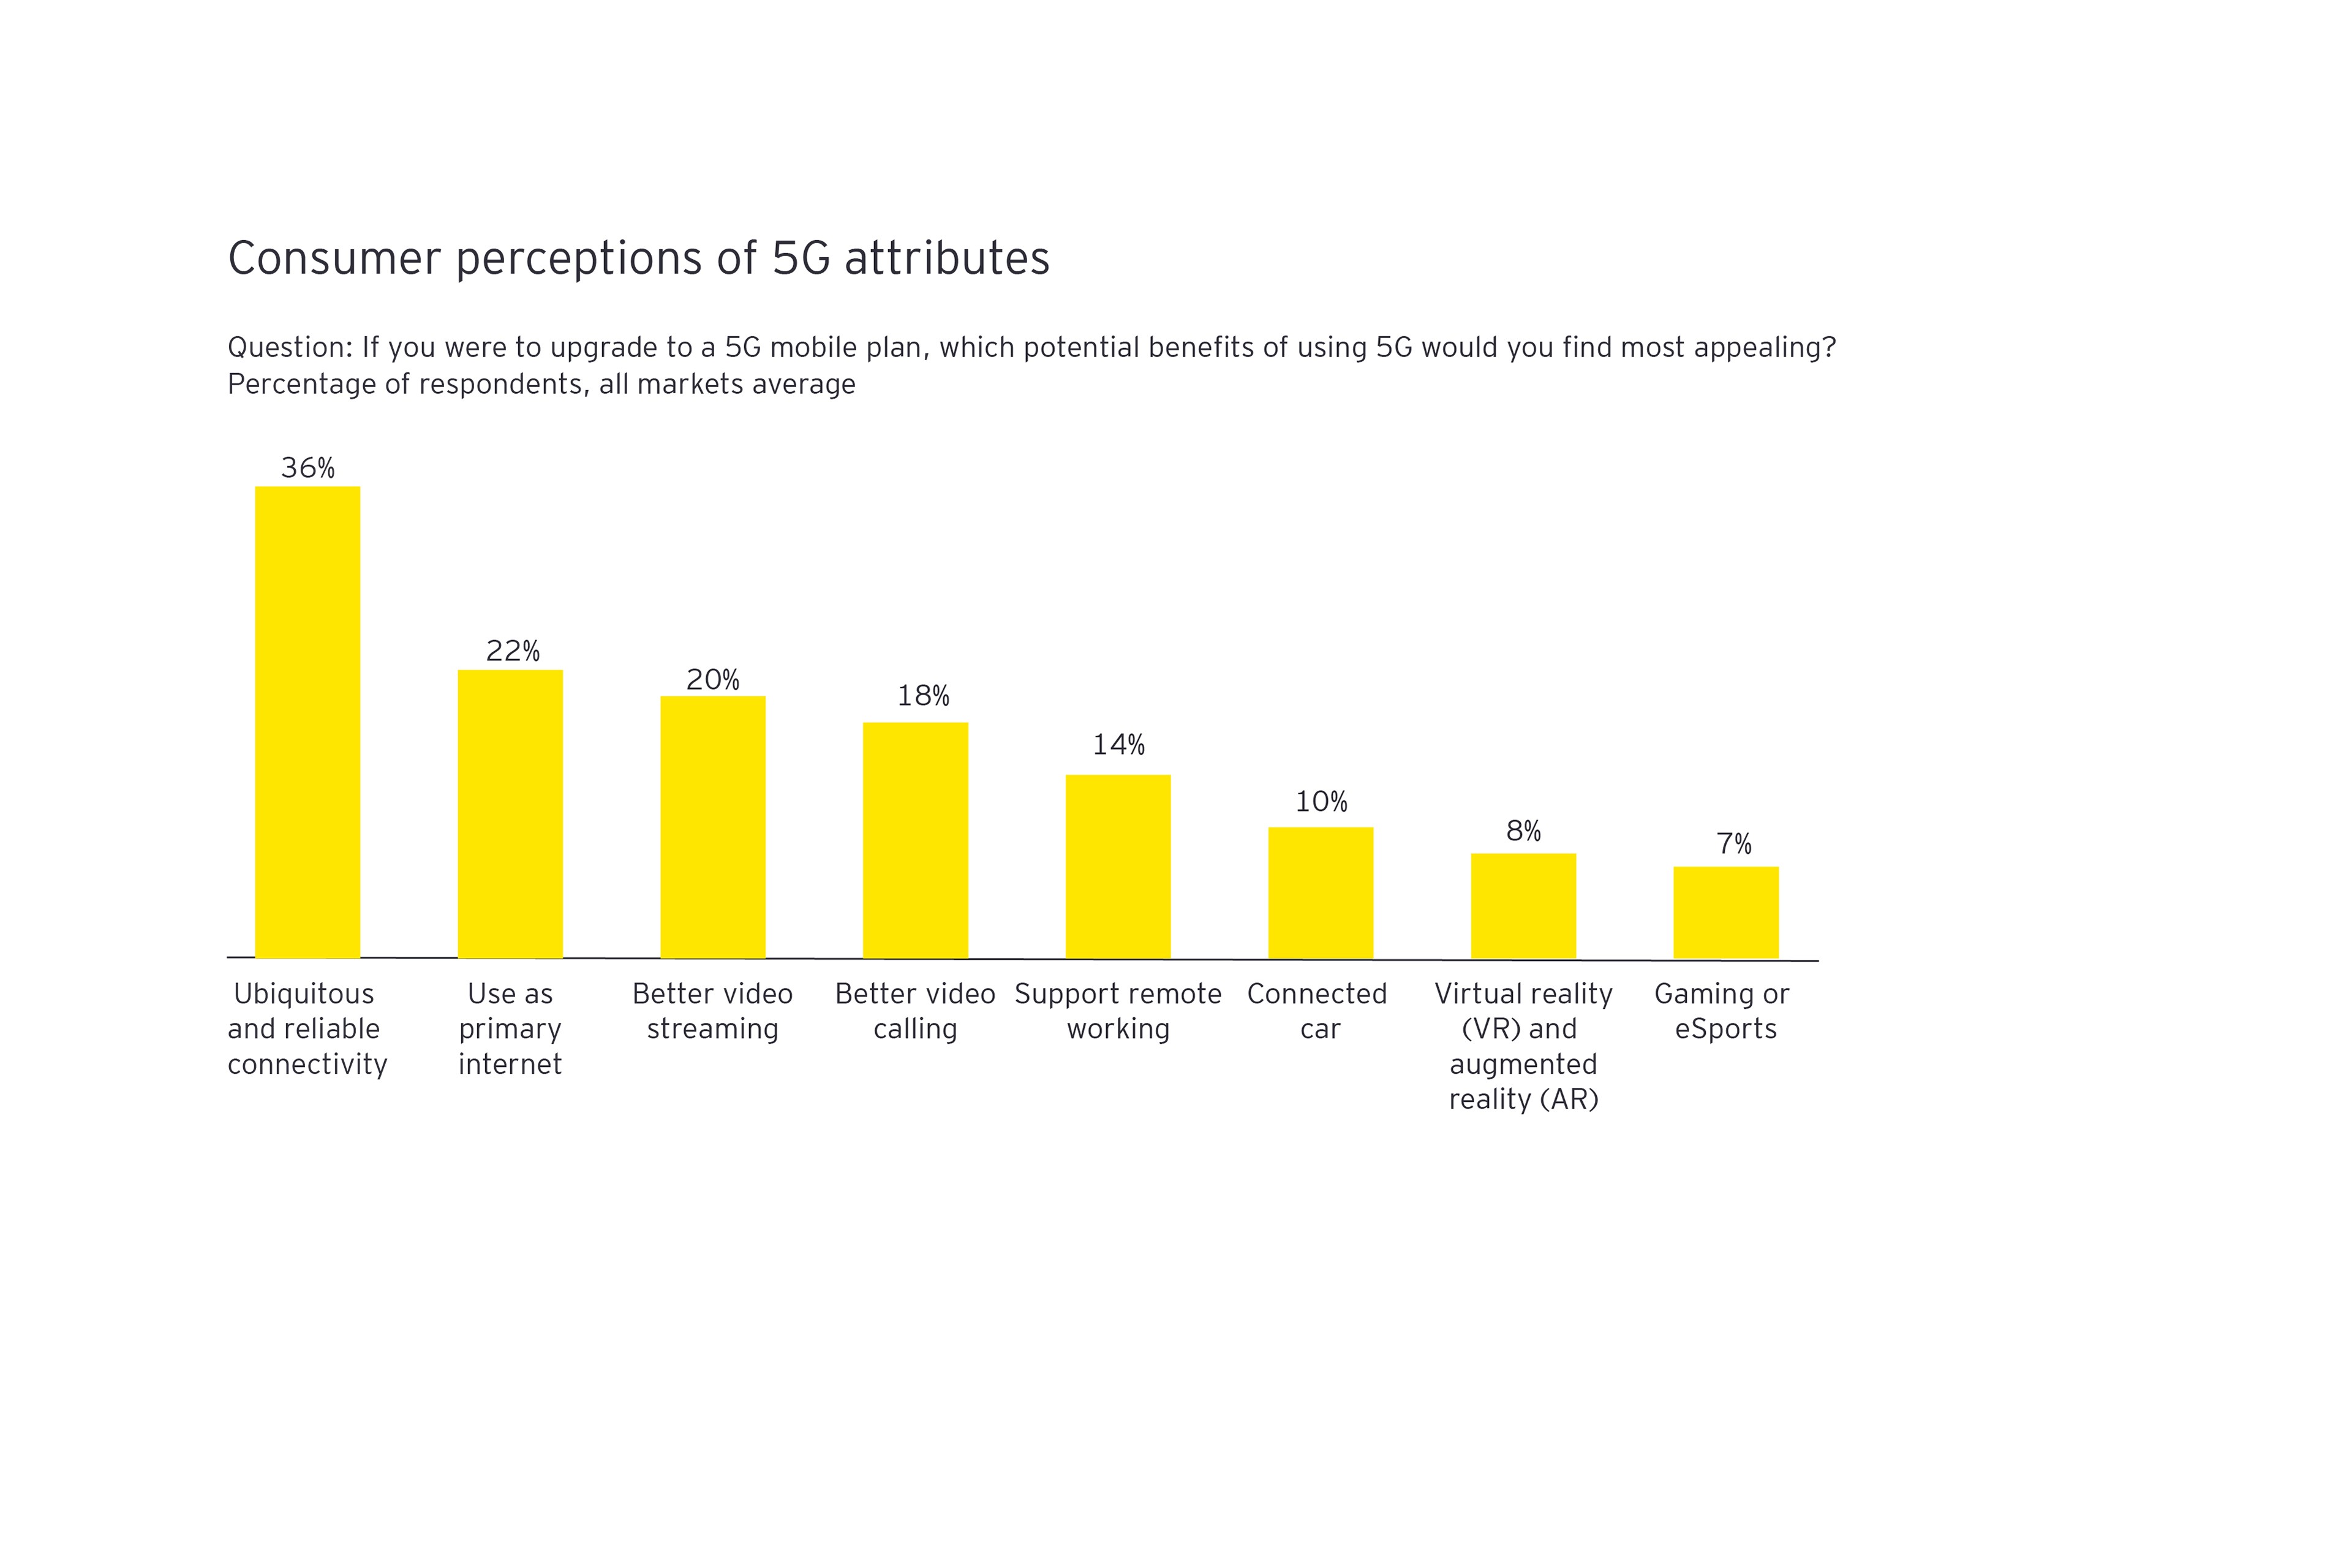 Consumer perception of 5G attributes